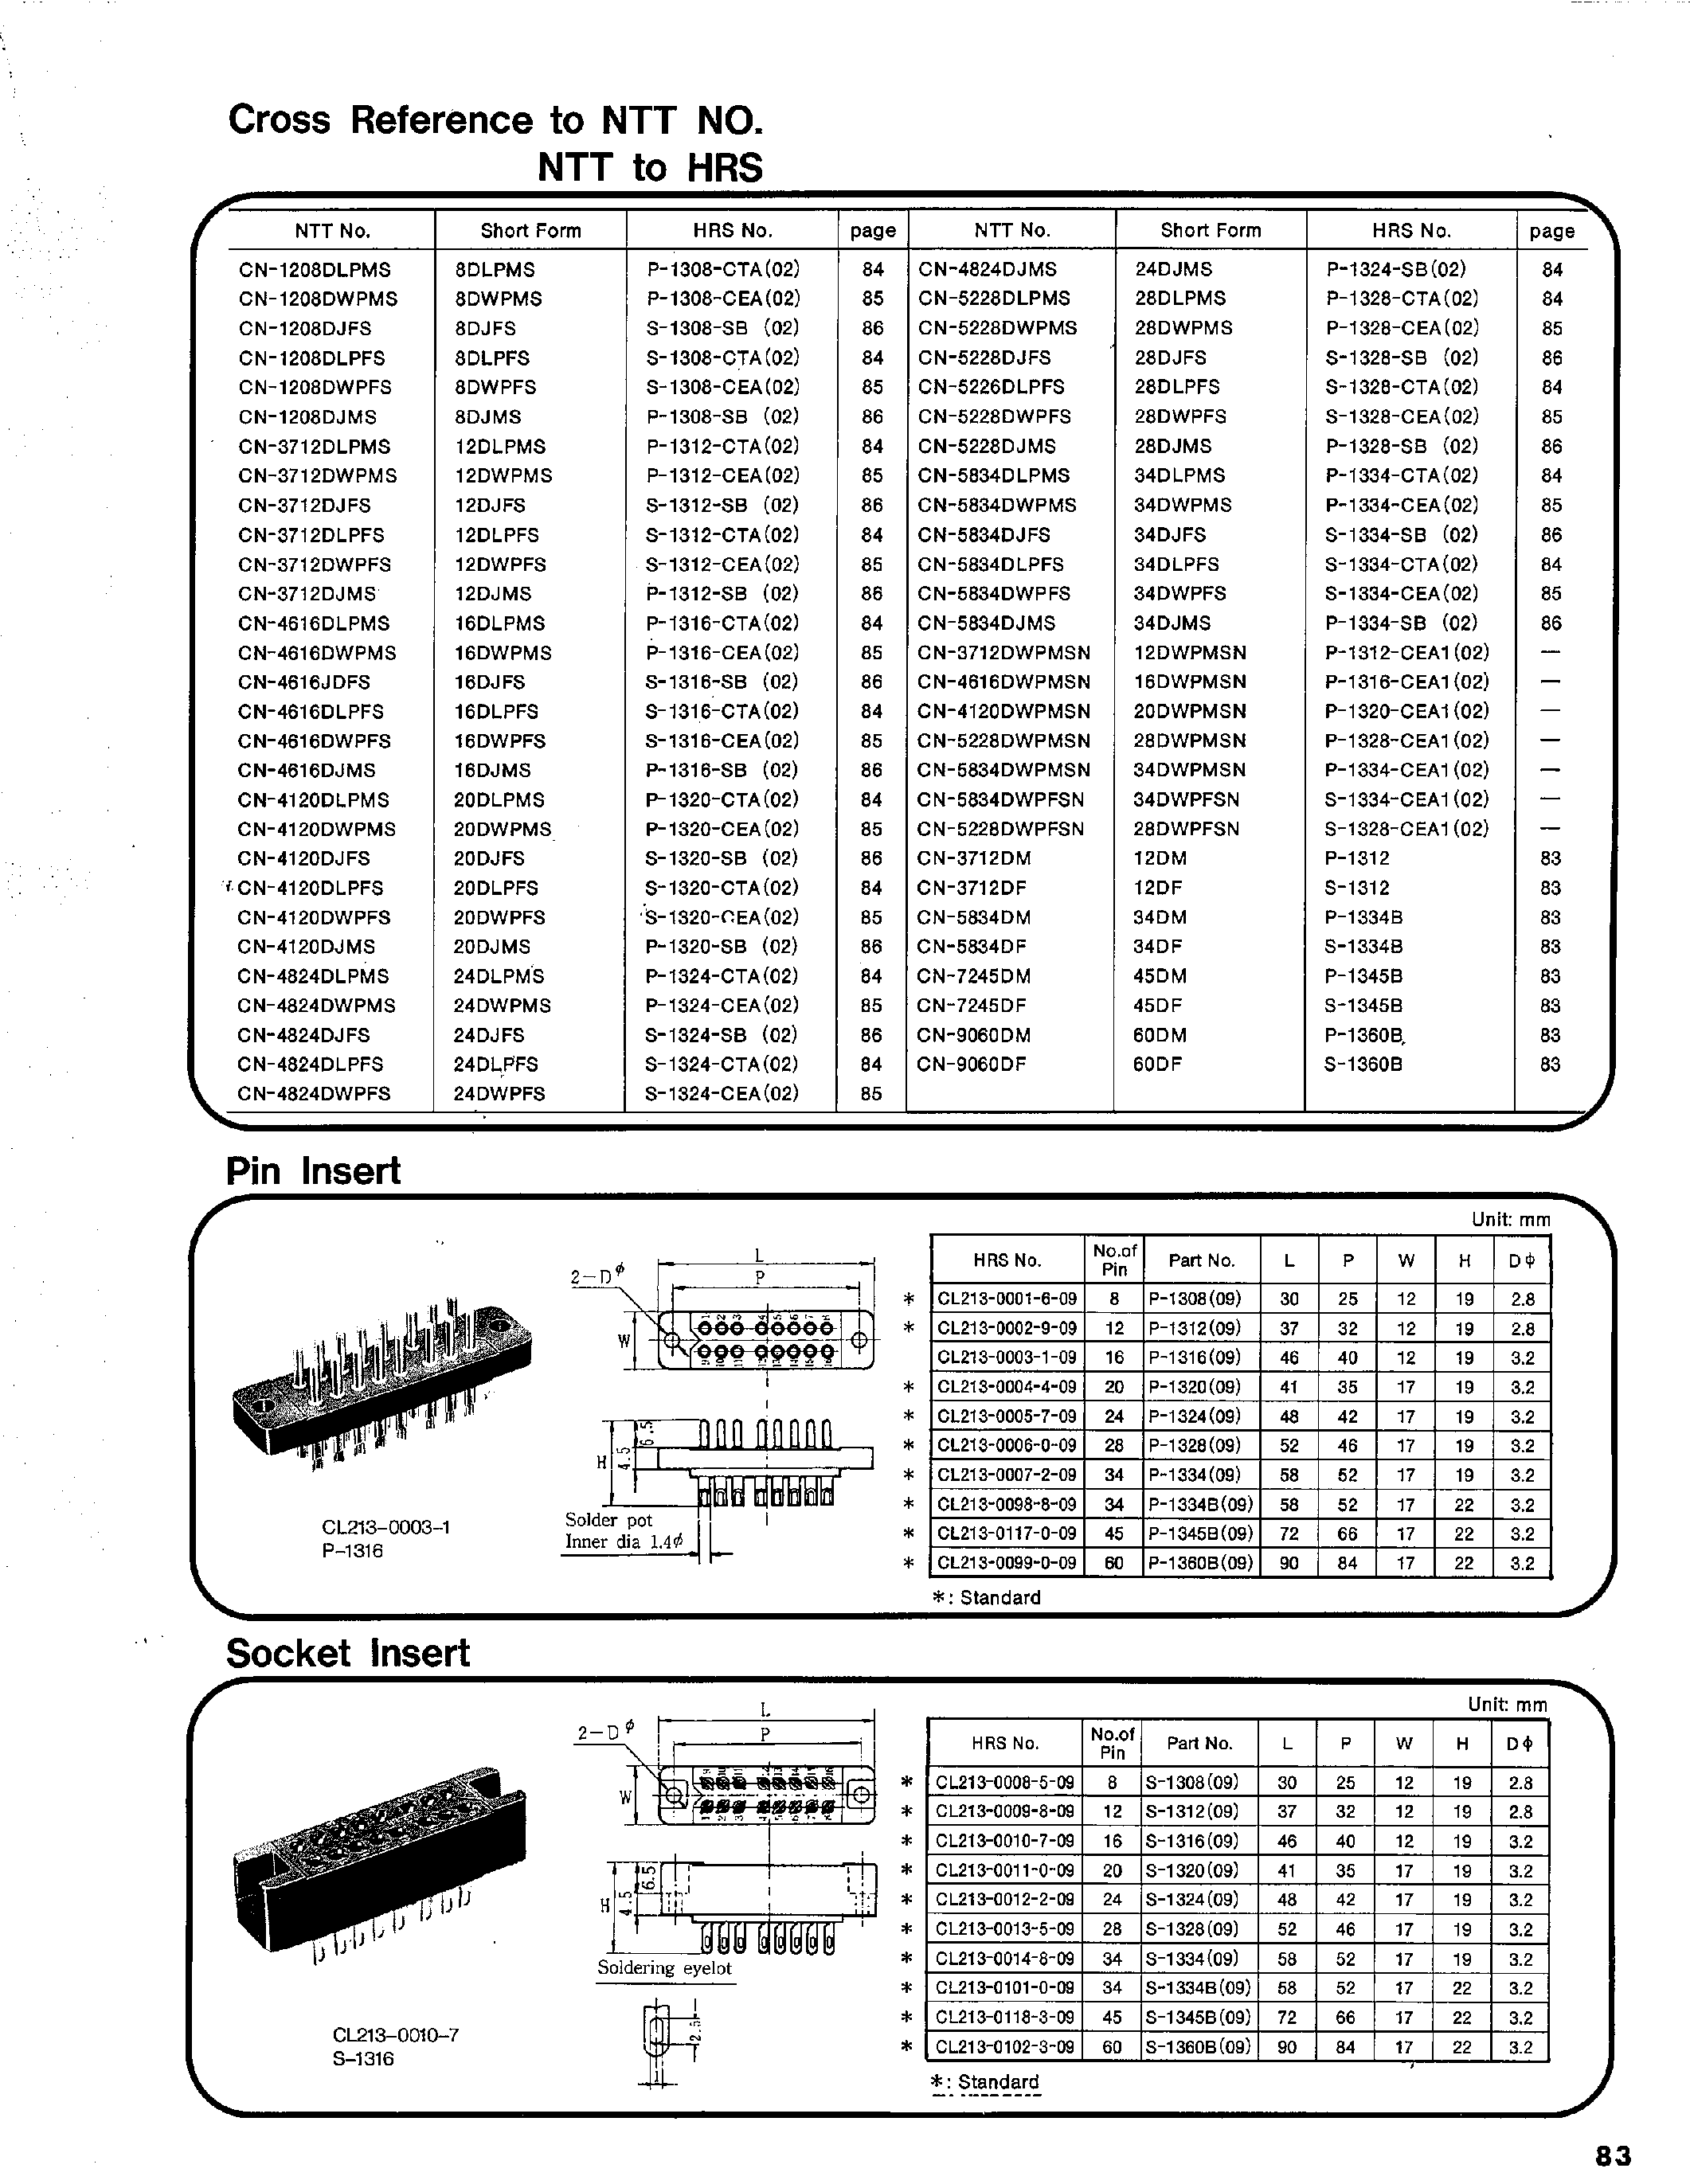 Datasheet P-1360-SB - 1300 SERIES RECTANGULAR CONNECTORS page 2